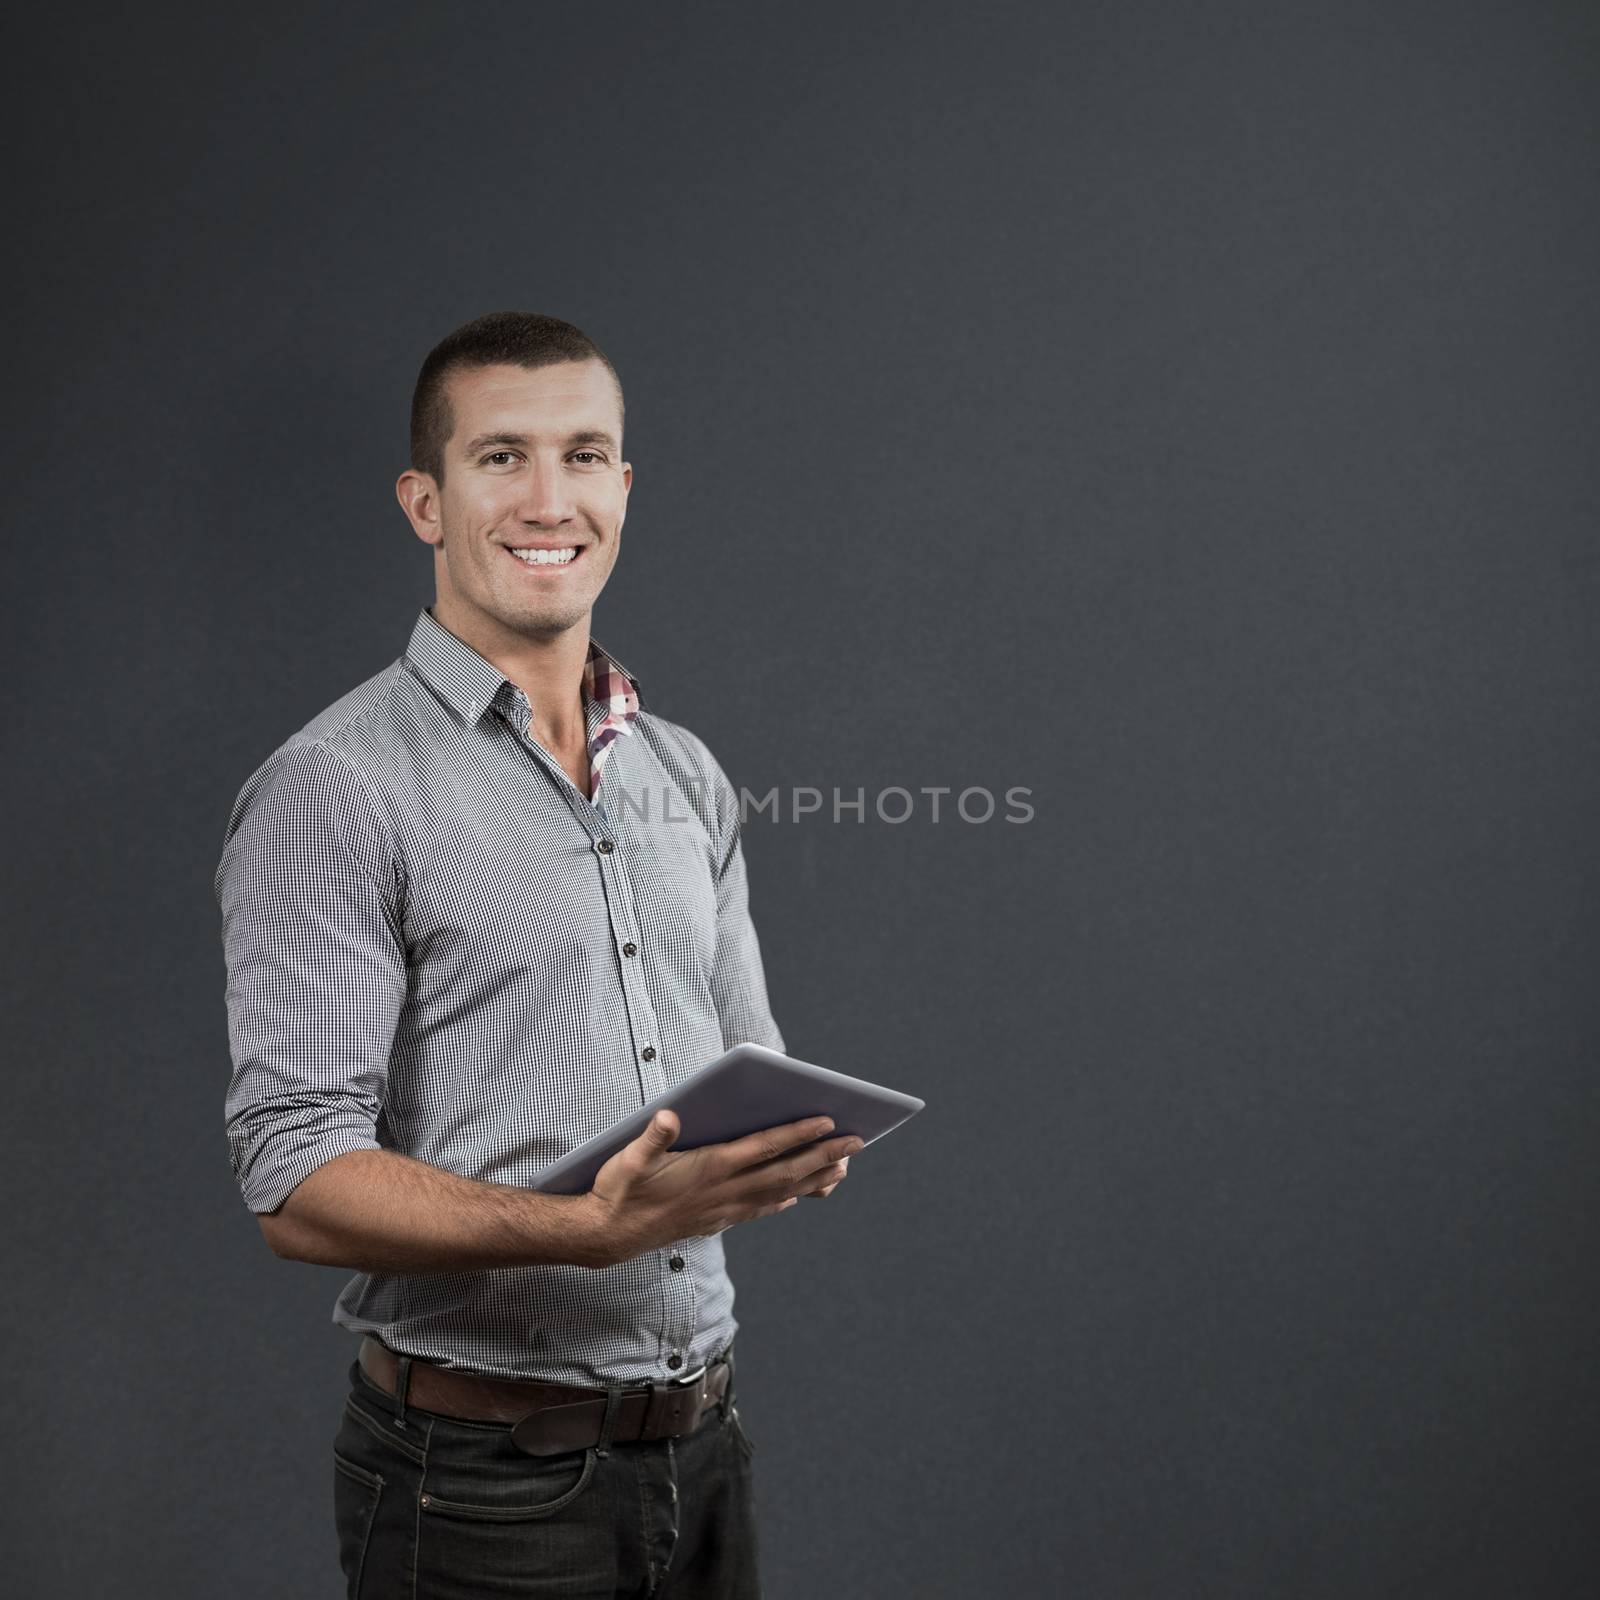 Handsome businessman using digital tablet over white background against grey background